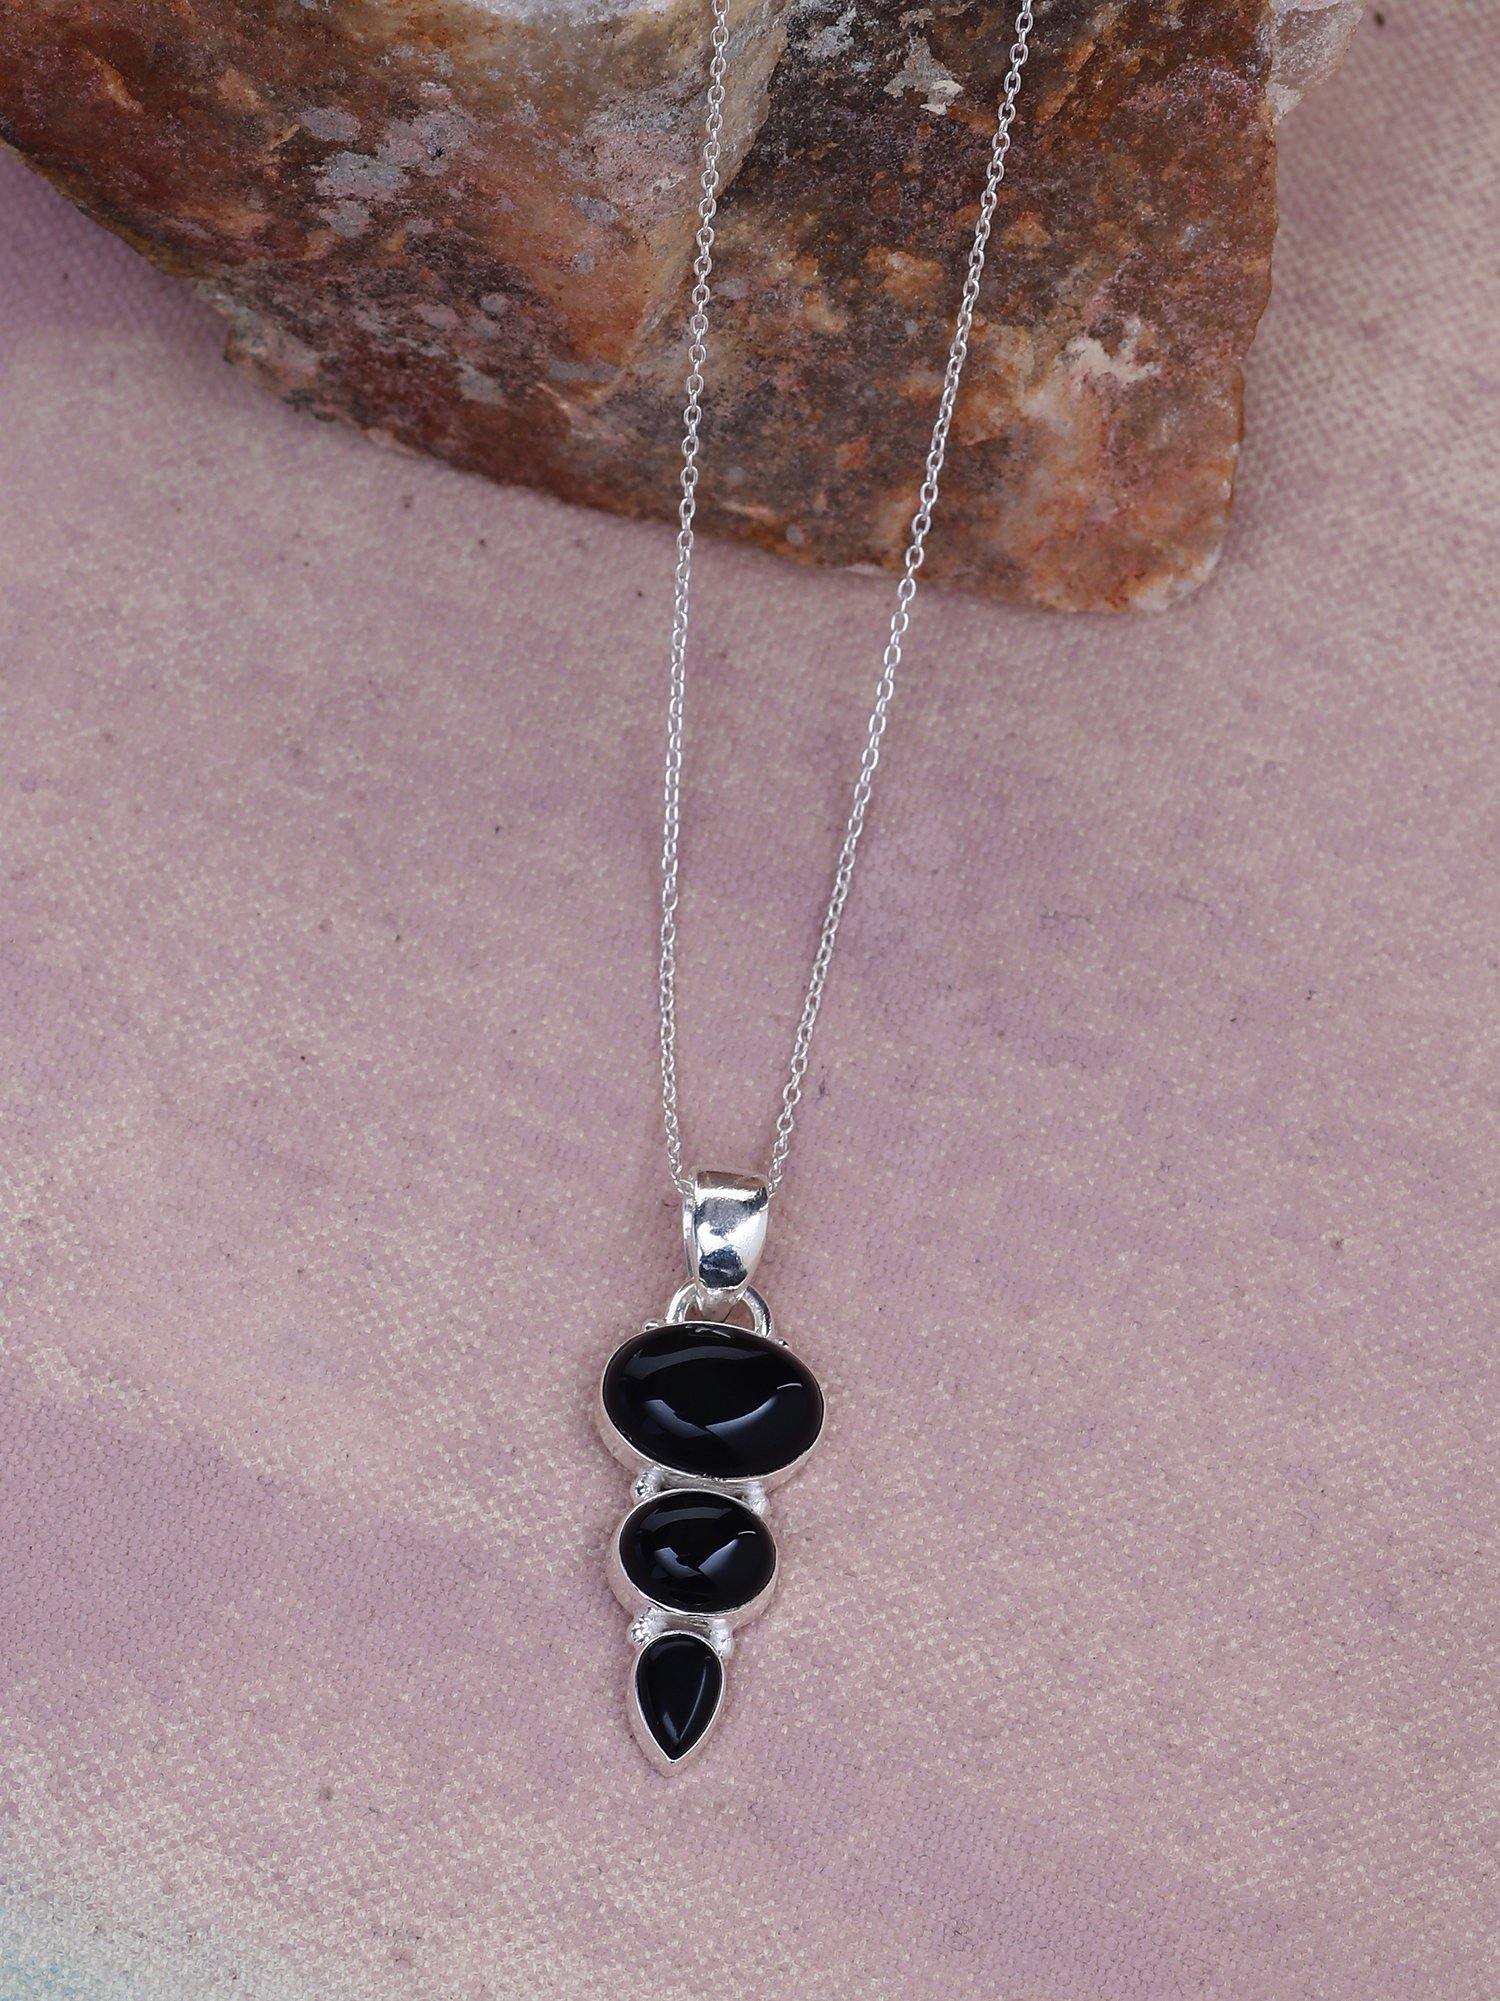 Black Onyx Solid 925 Sterling Silver Chain Pendant Jewelry - YoTreasure